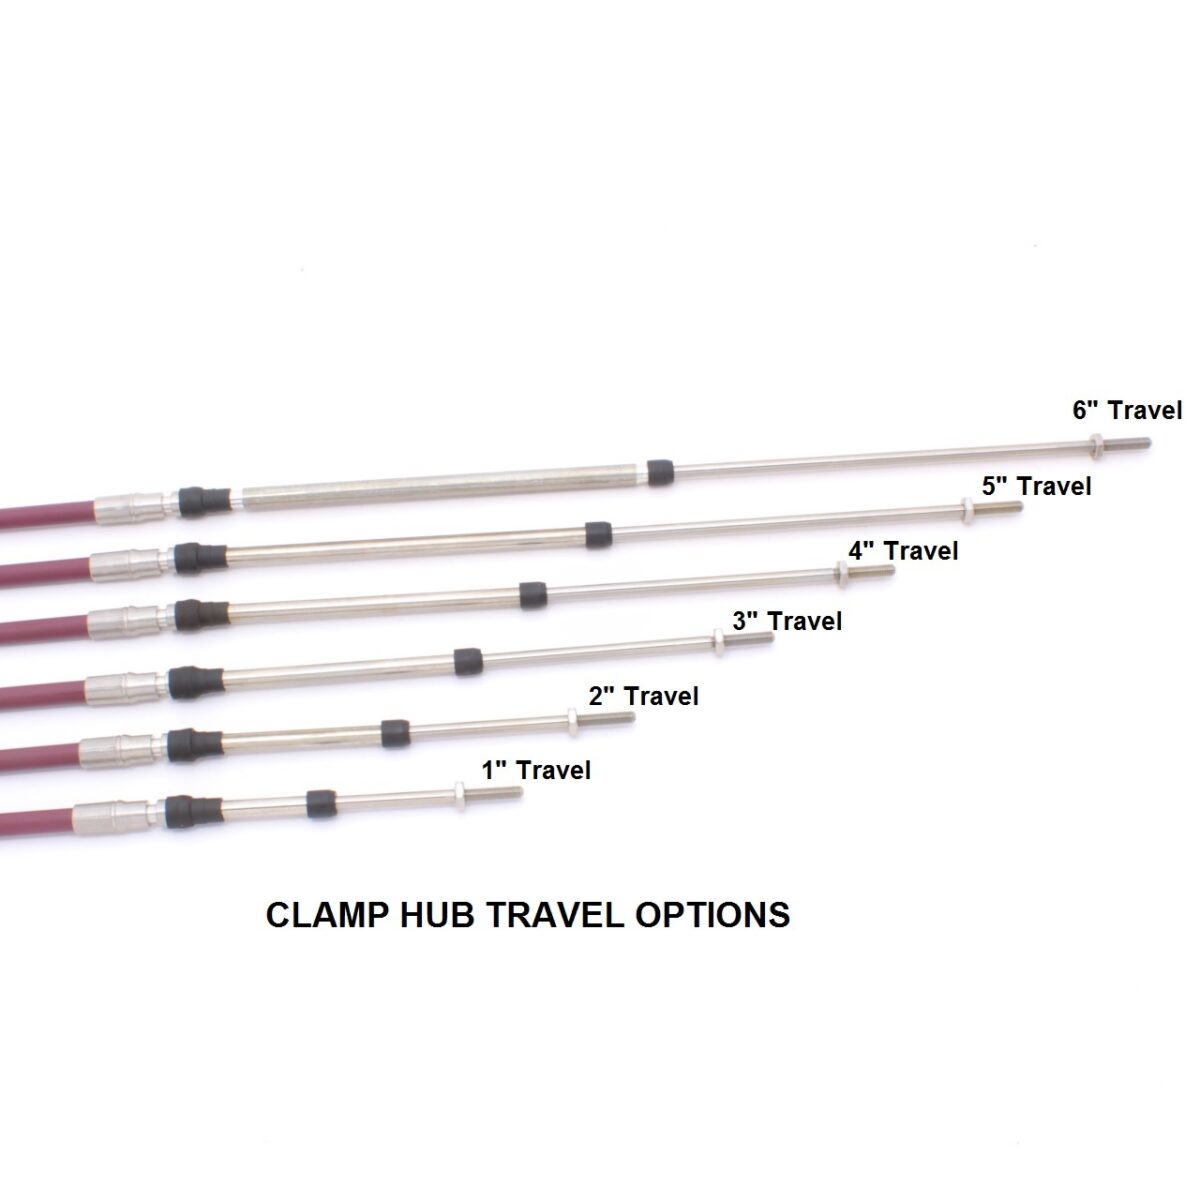 Clamp Hub Travel Options